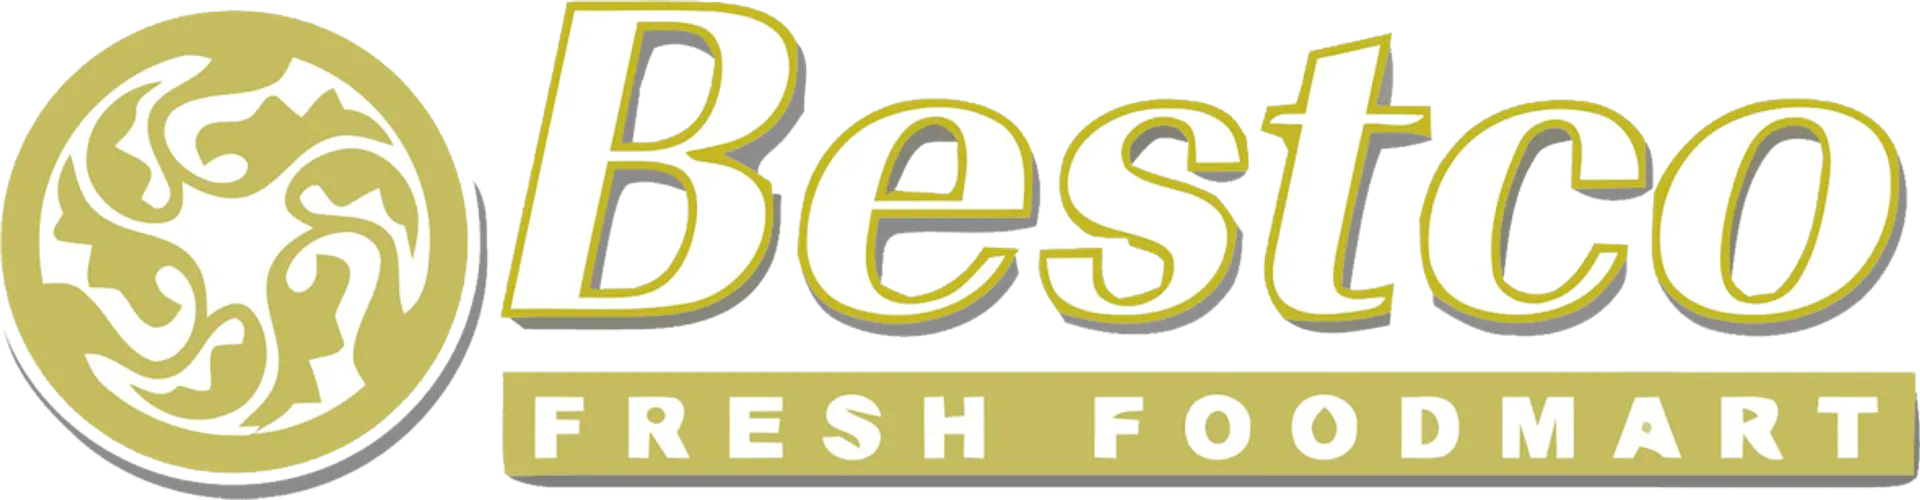 BESTCO FOODMART logo. Current weekly ad